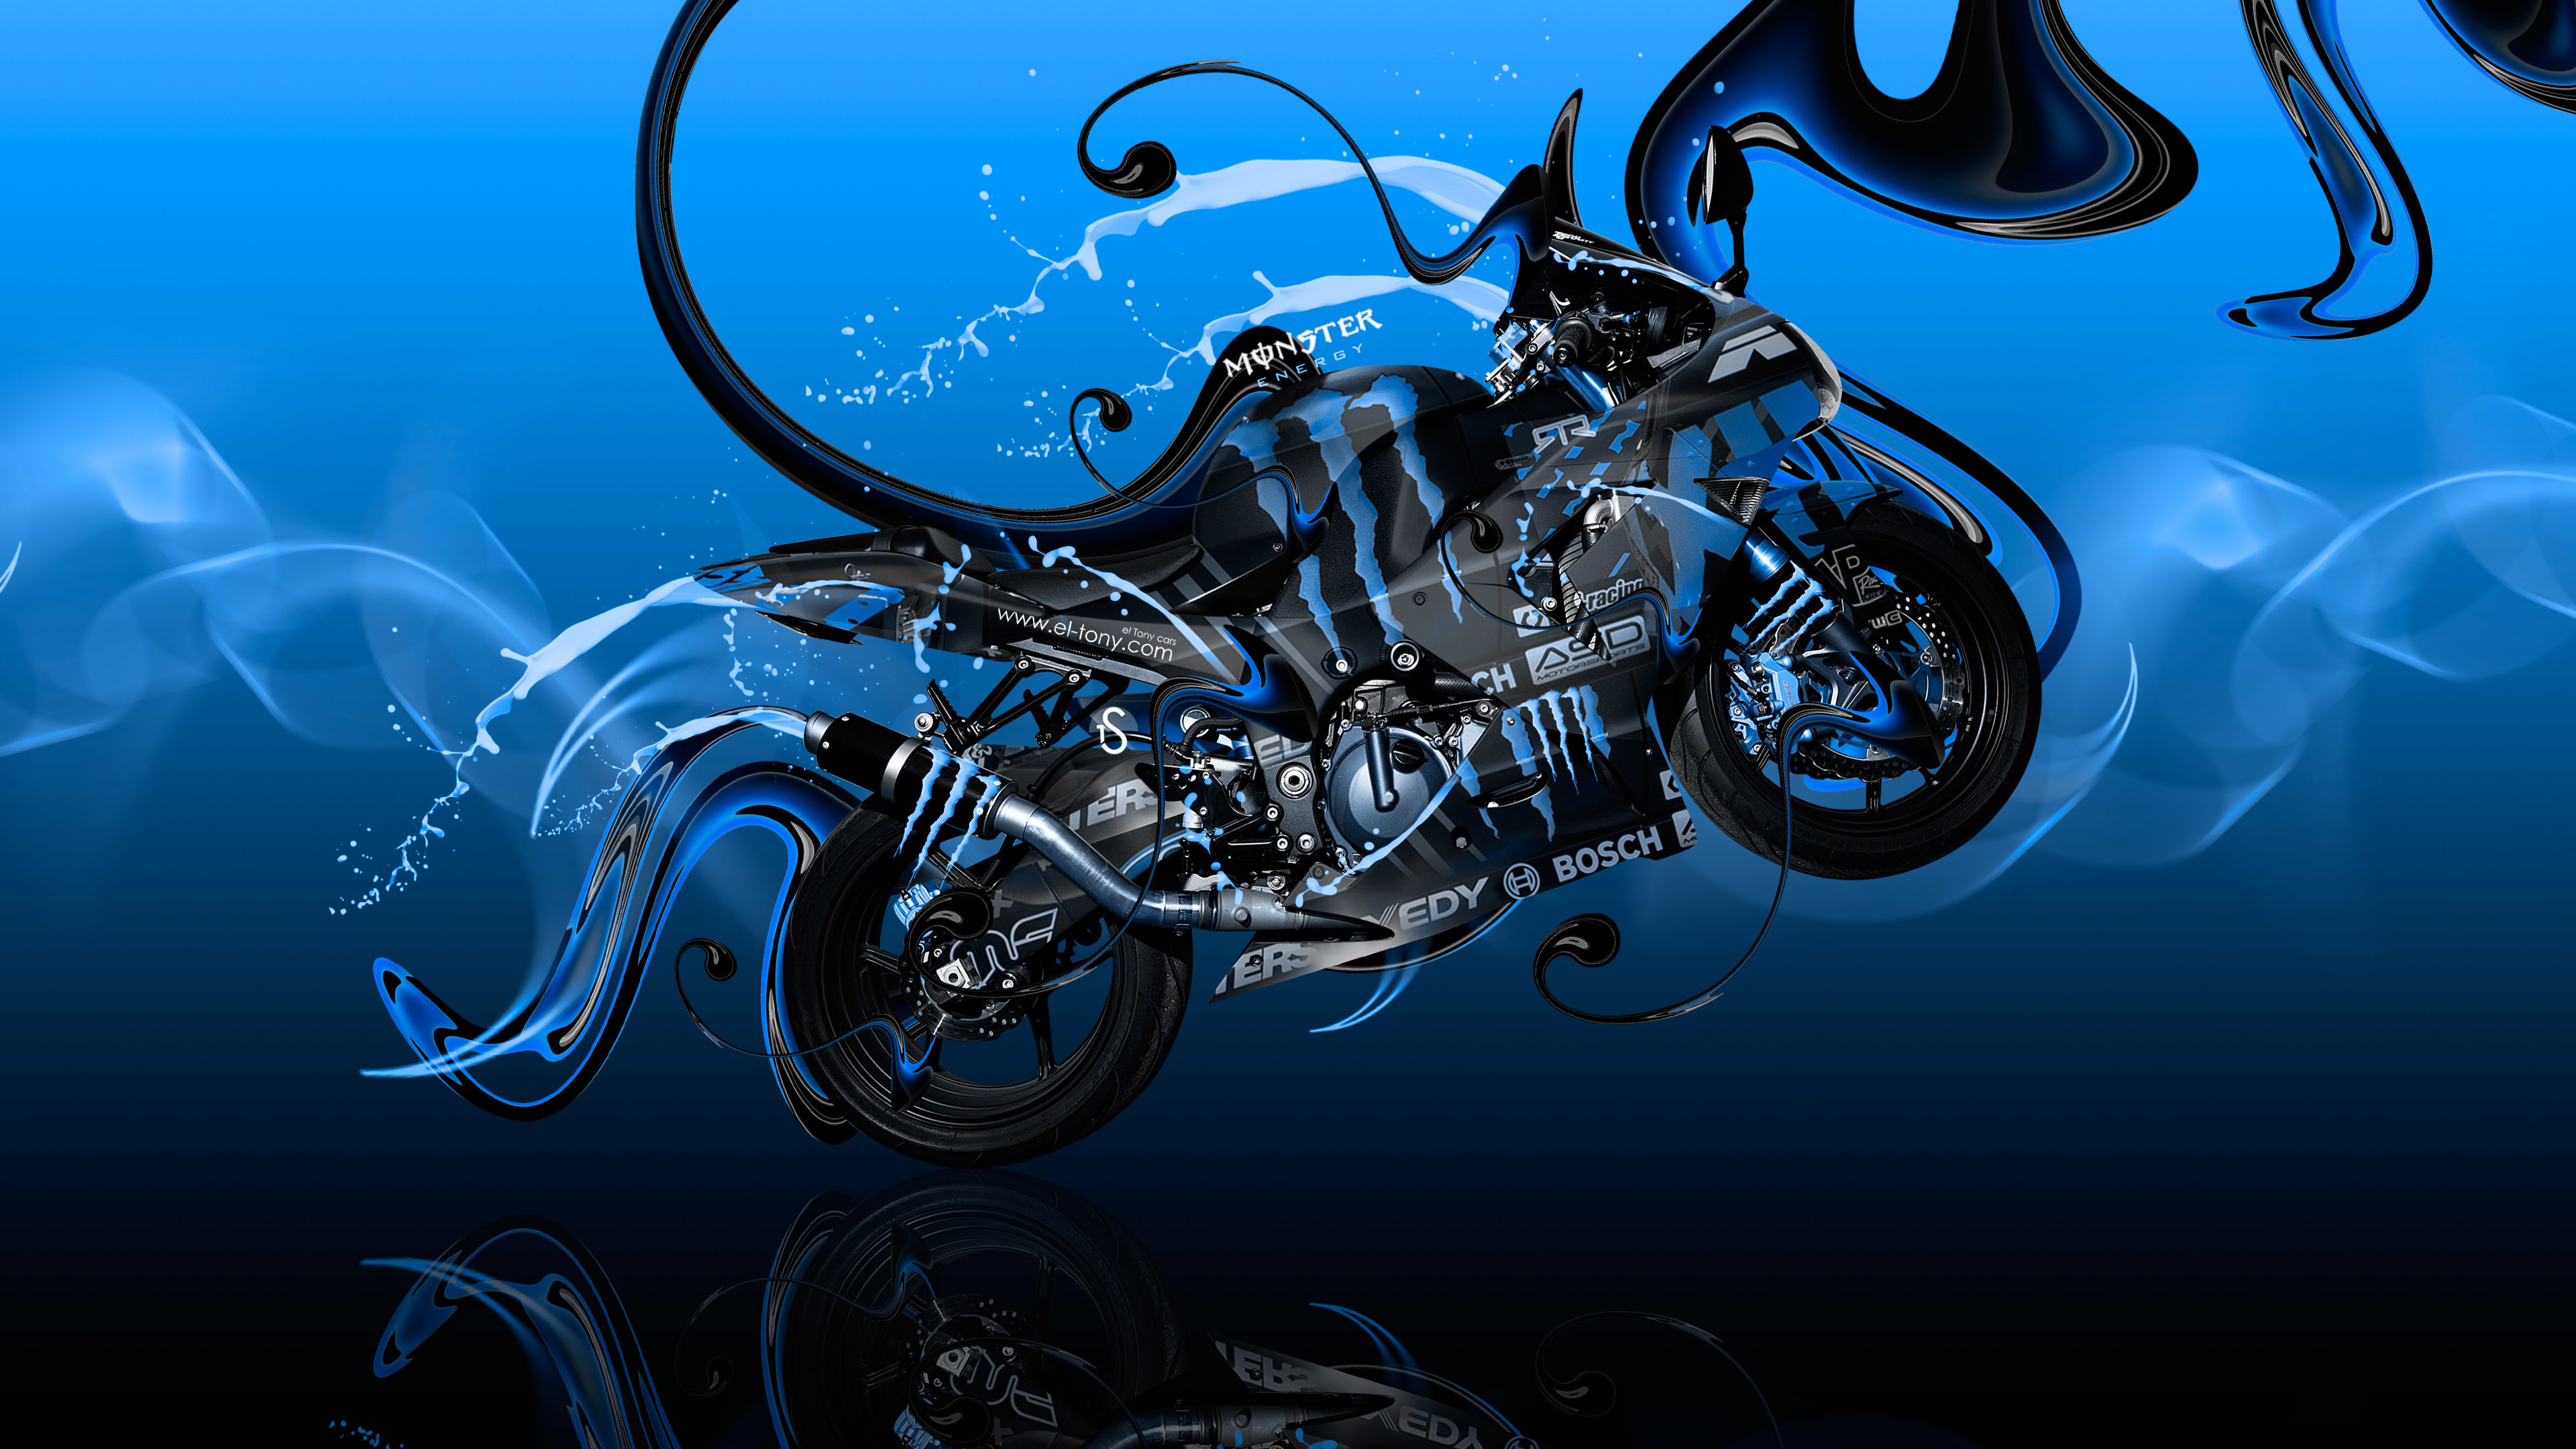 3840x2160 ... Monster-Energy-Moto-Kawasaki-Side-Super-Plastic-Bike- ...